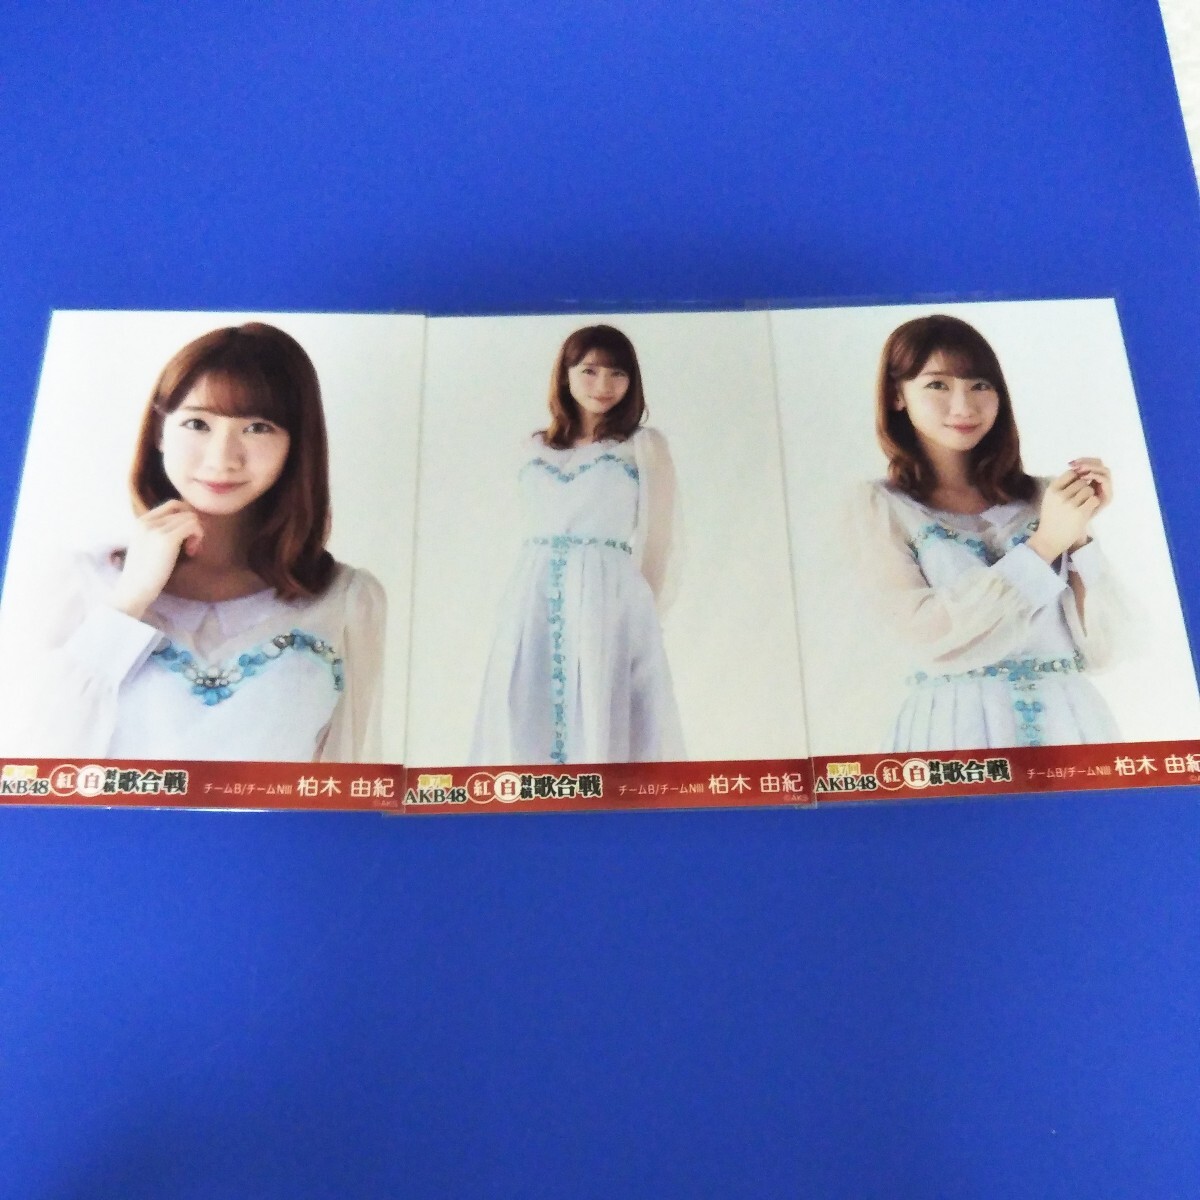  「送料無料」同梱可能AKB48柏木由紀生写真第7回AKB48紅白対抗歌合戦3種コンプ 1スタの画像1